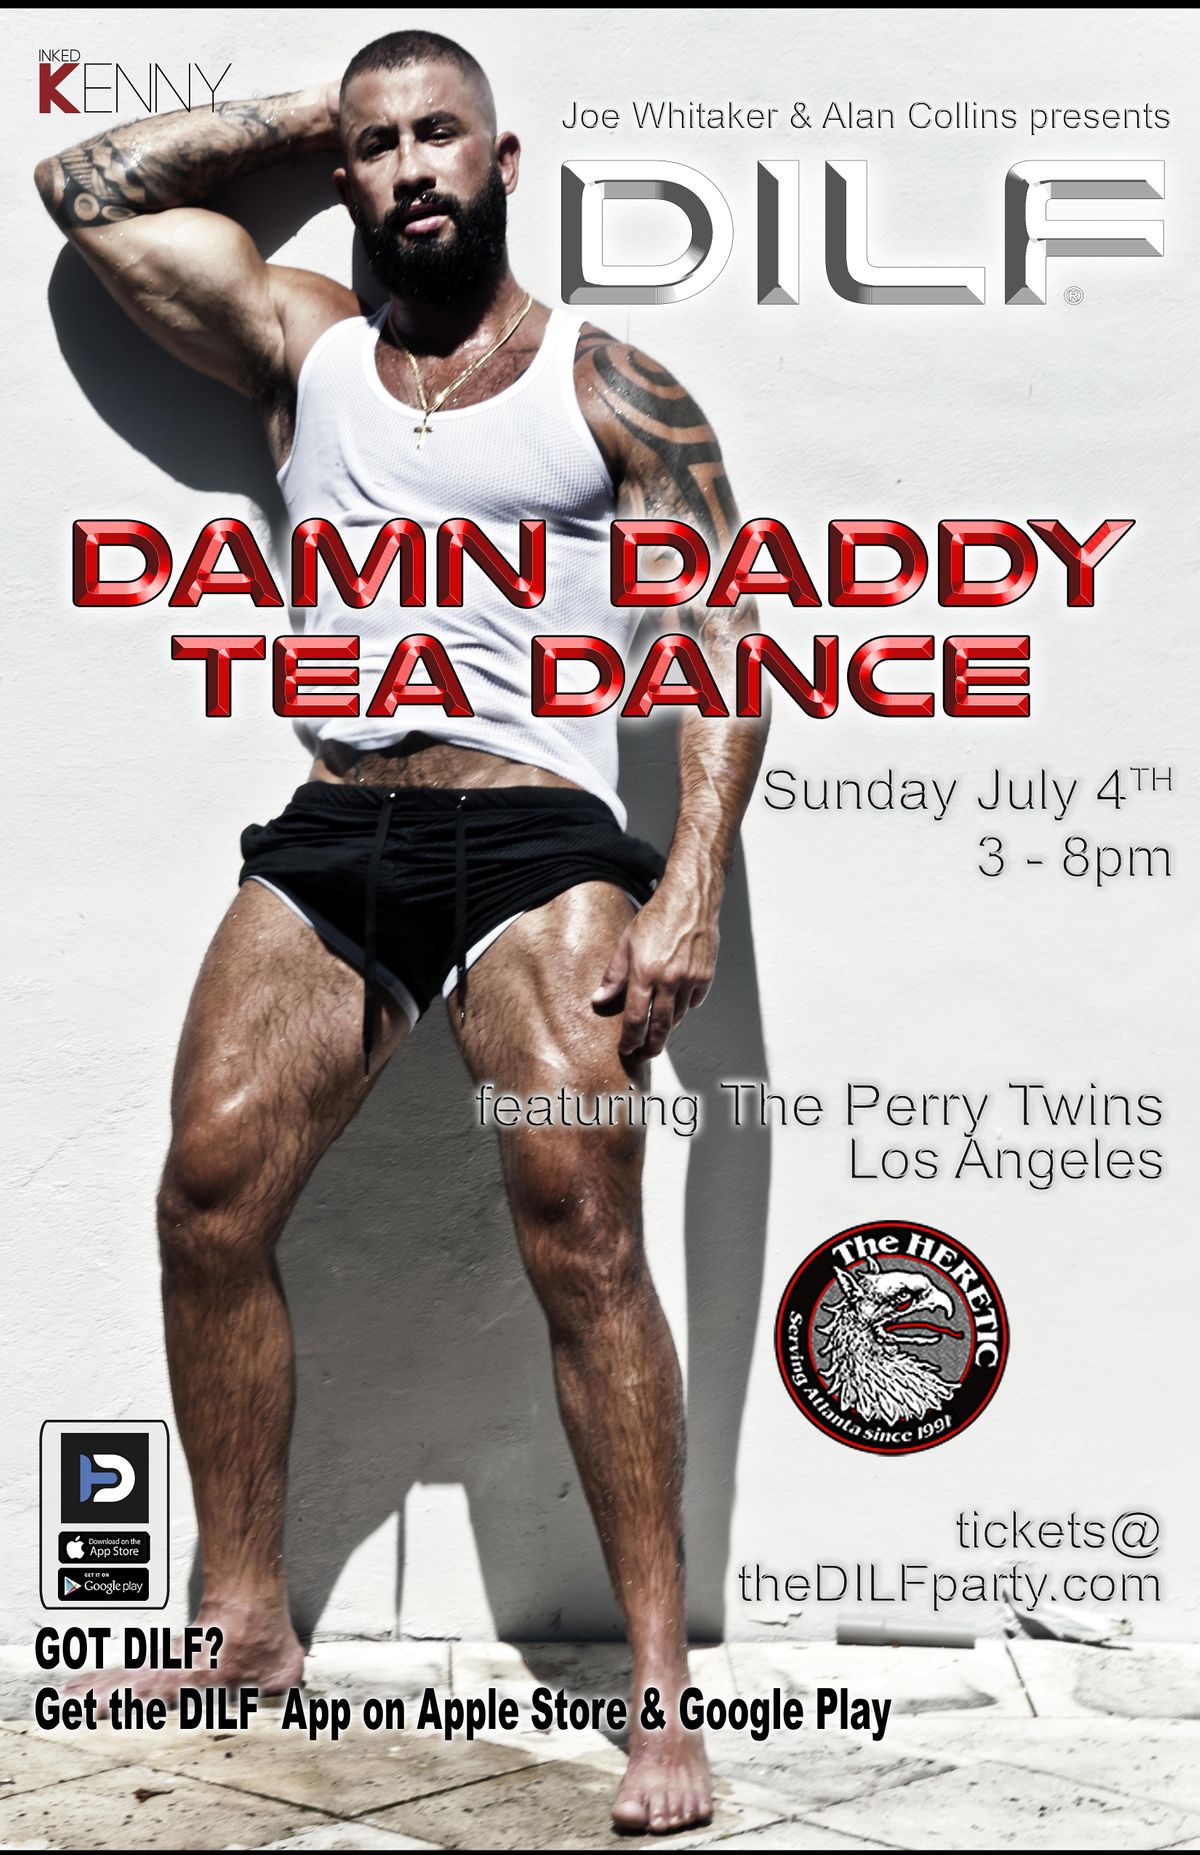 DILF Atlanta "DAMN DADDY" T DANCE by Joe Whitaker Presents